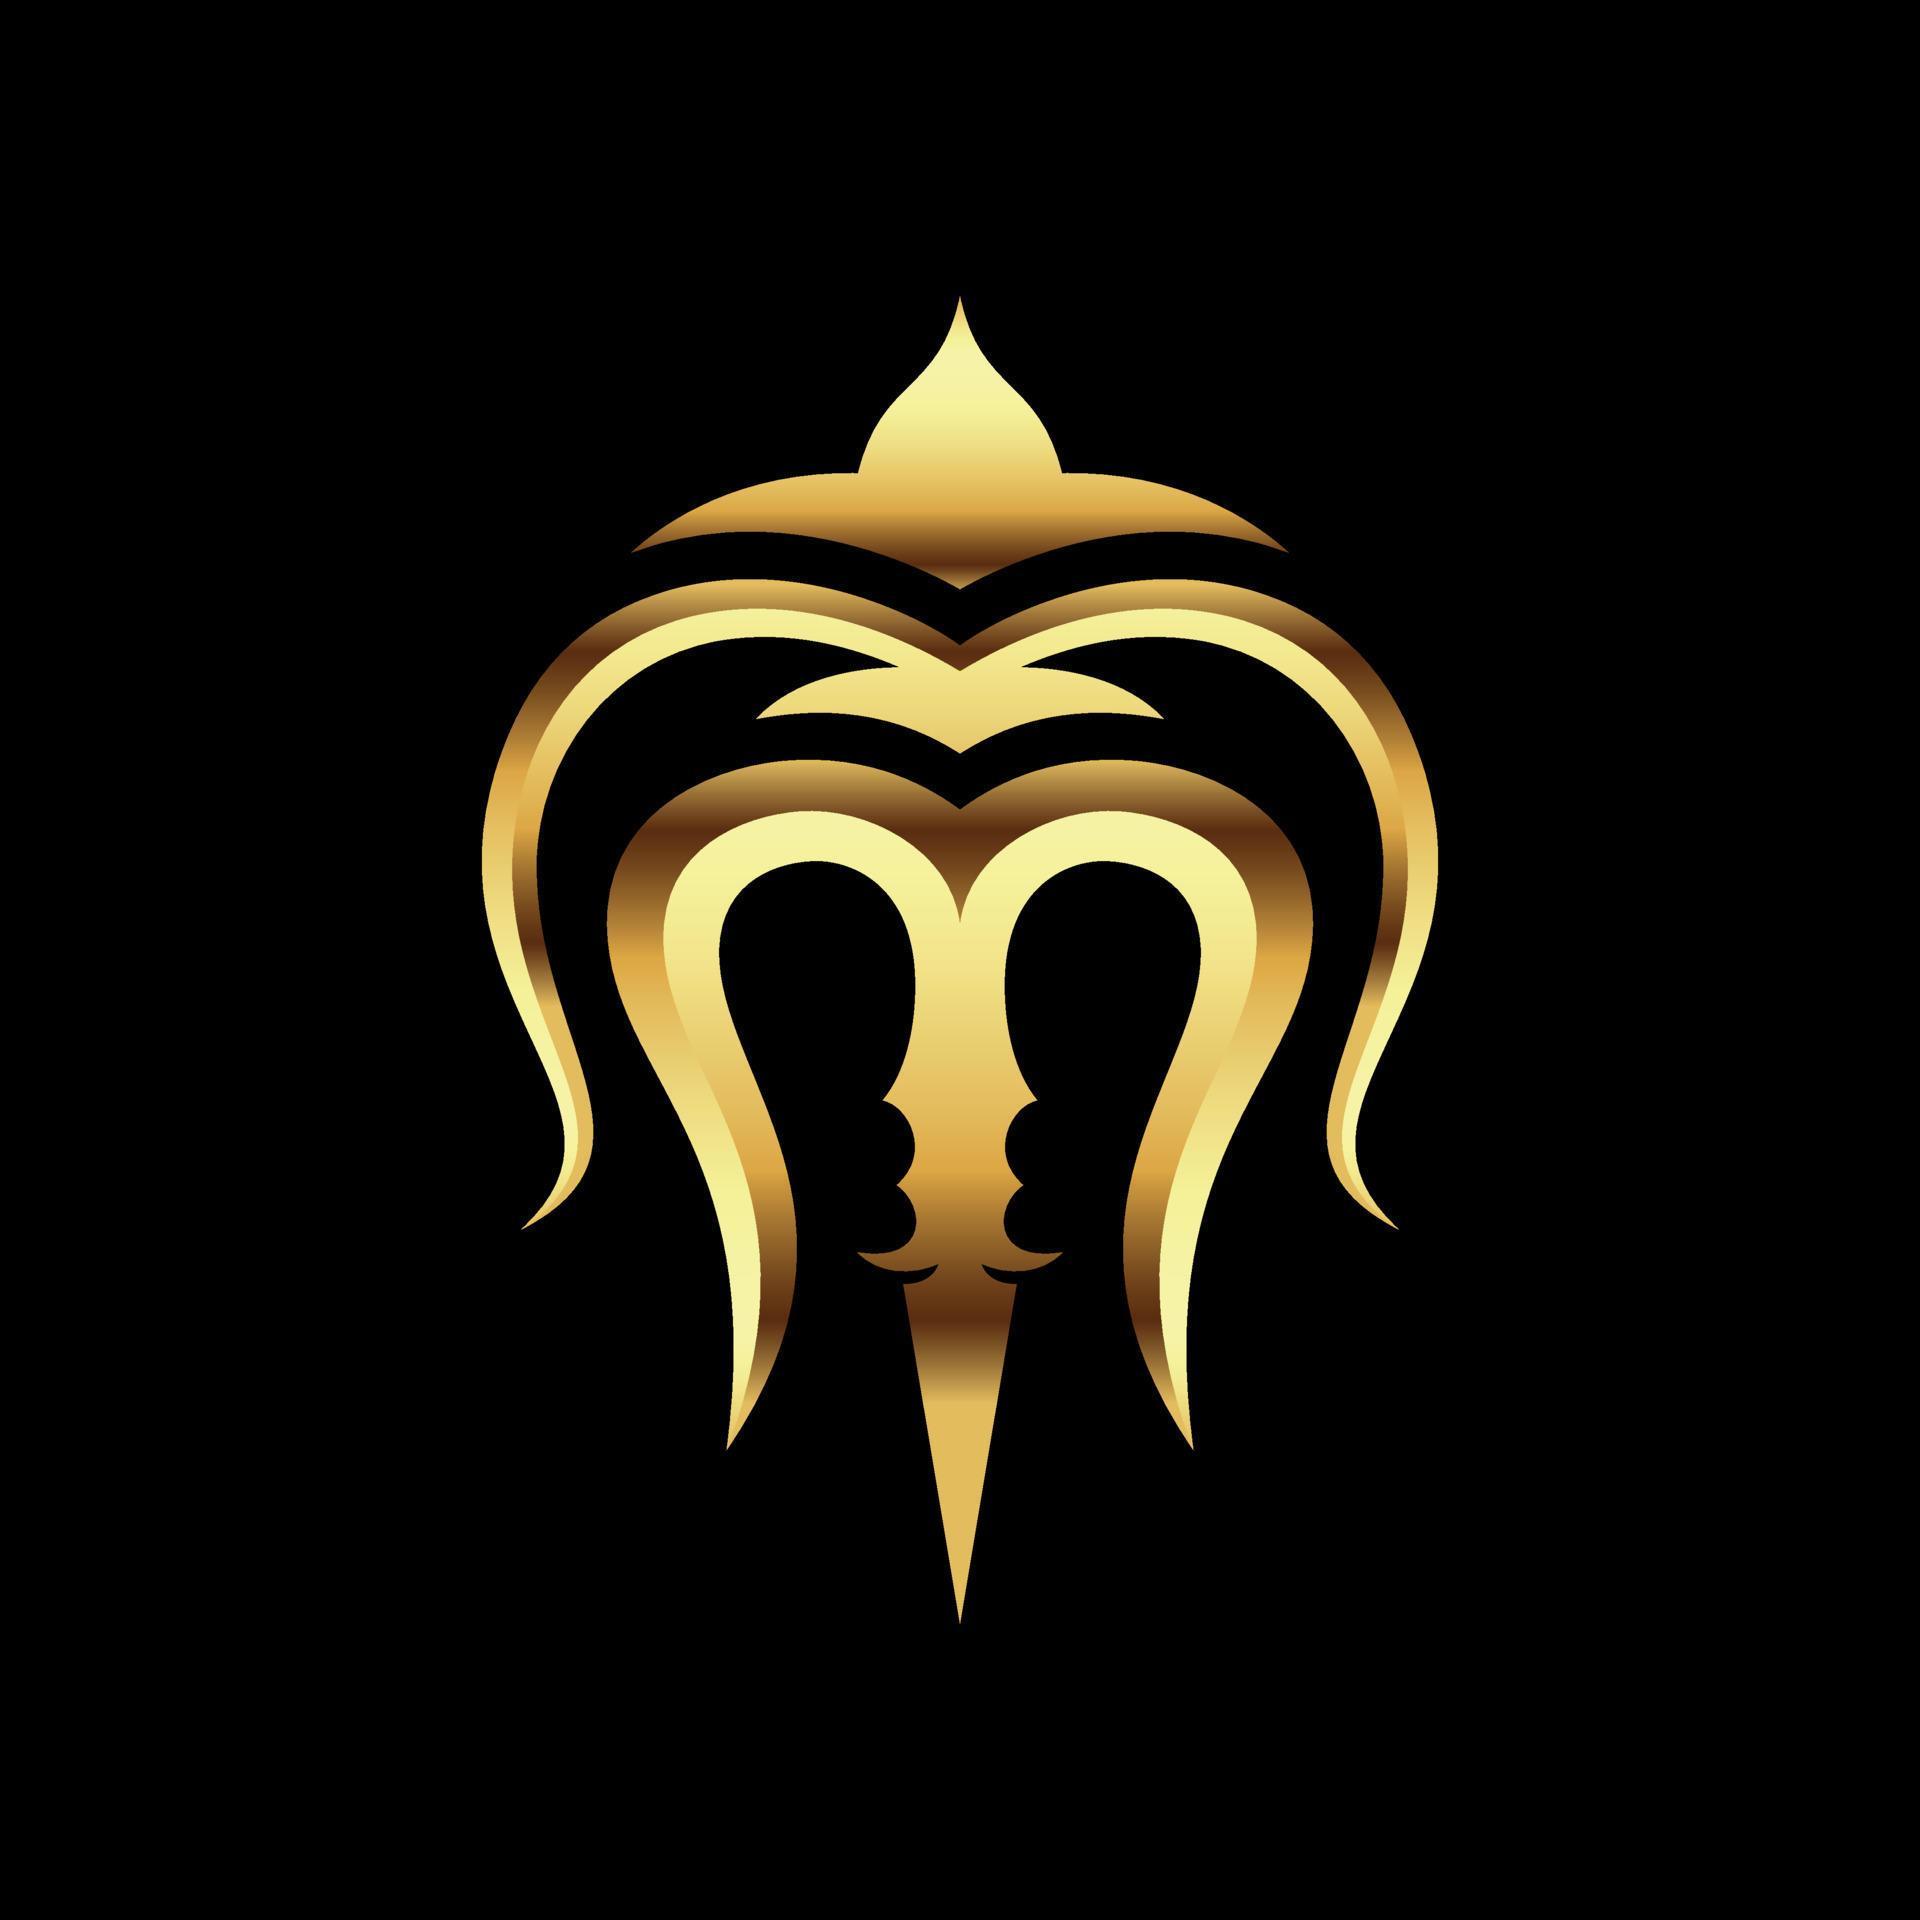 Sword logo design